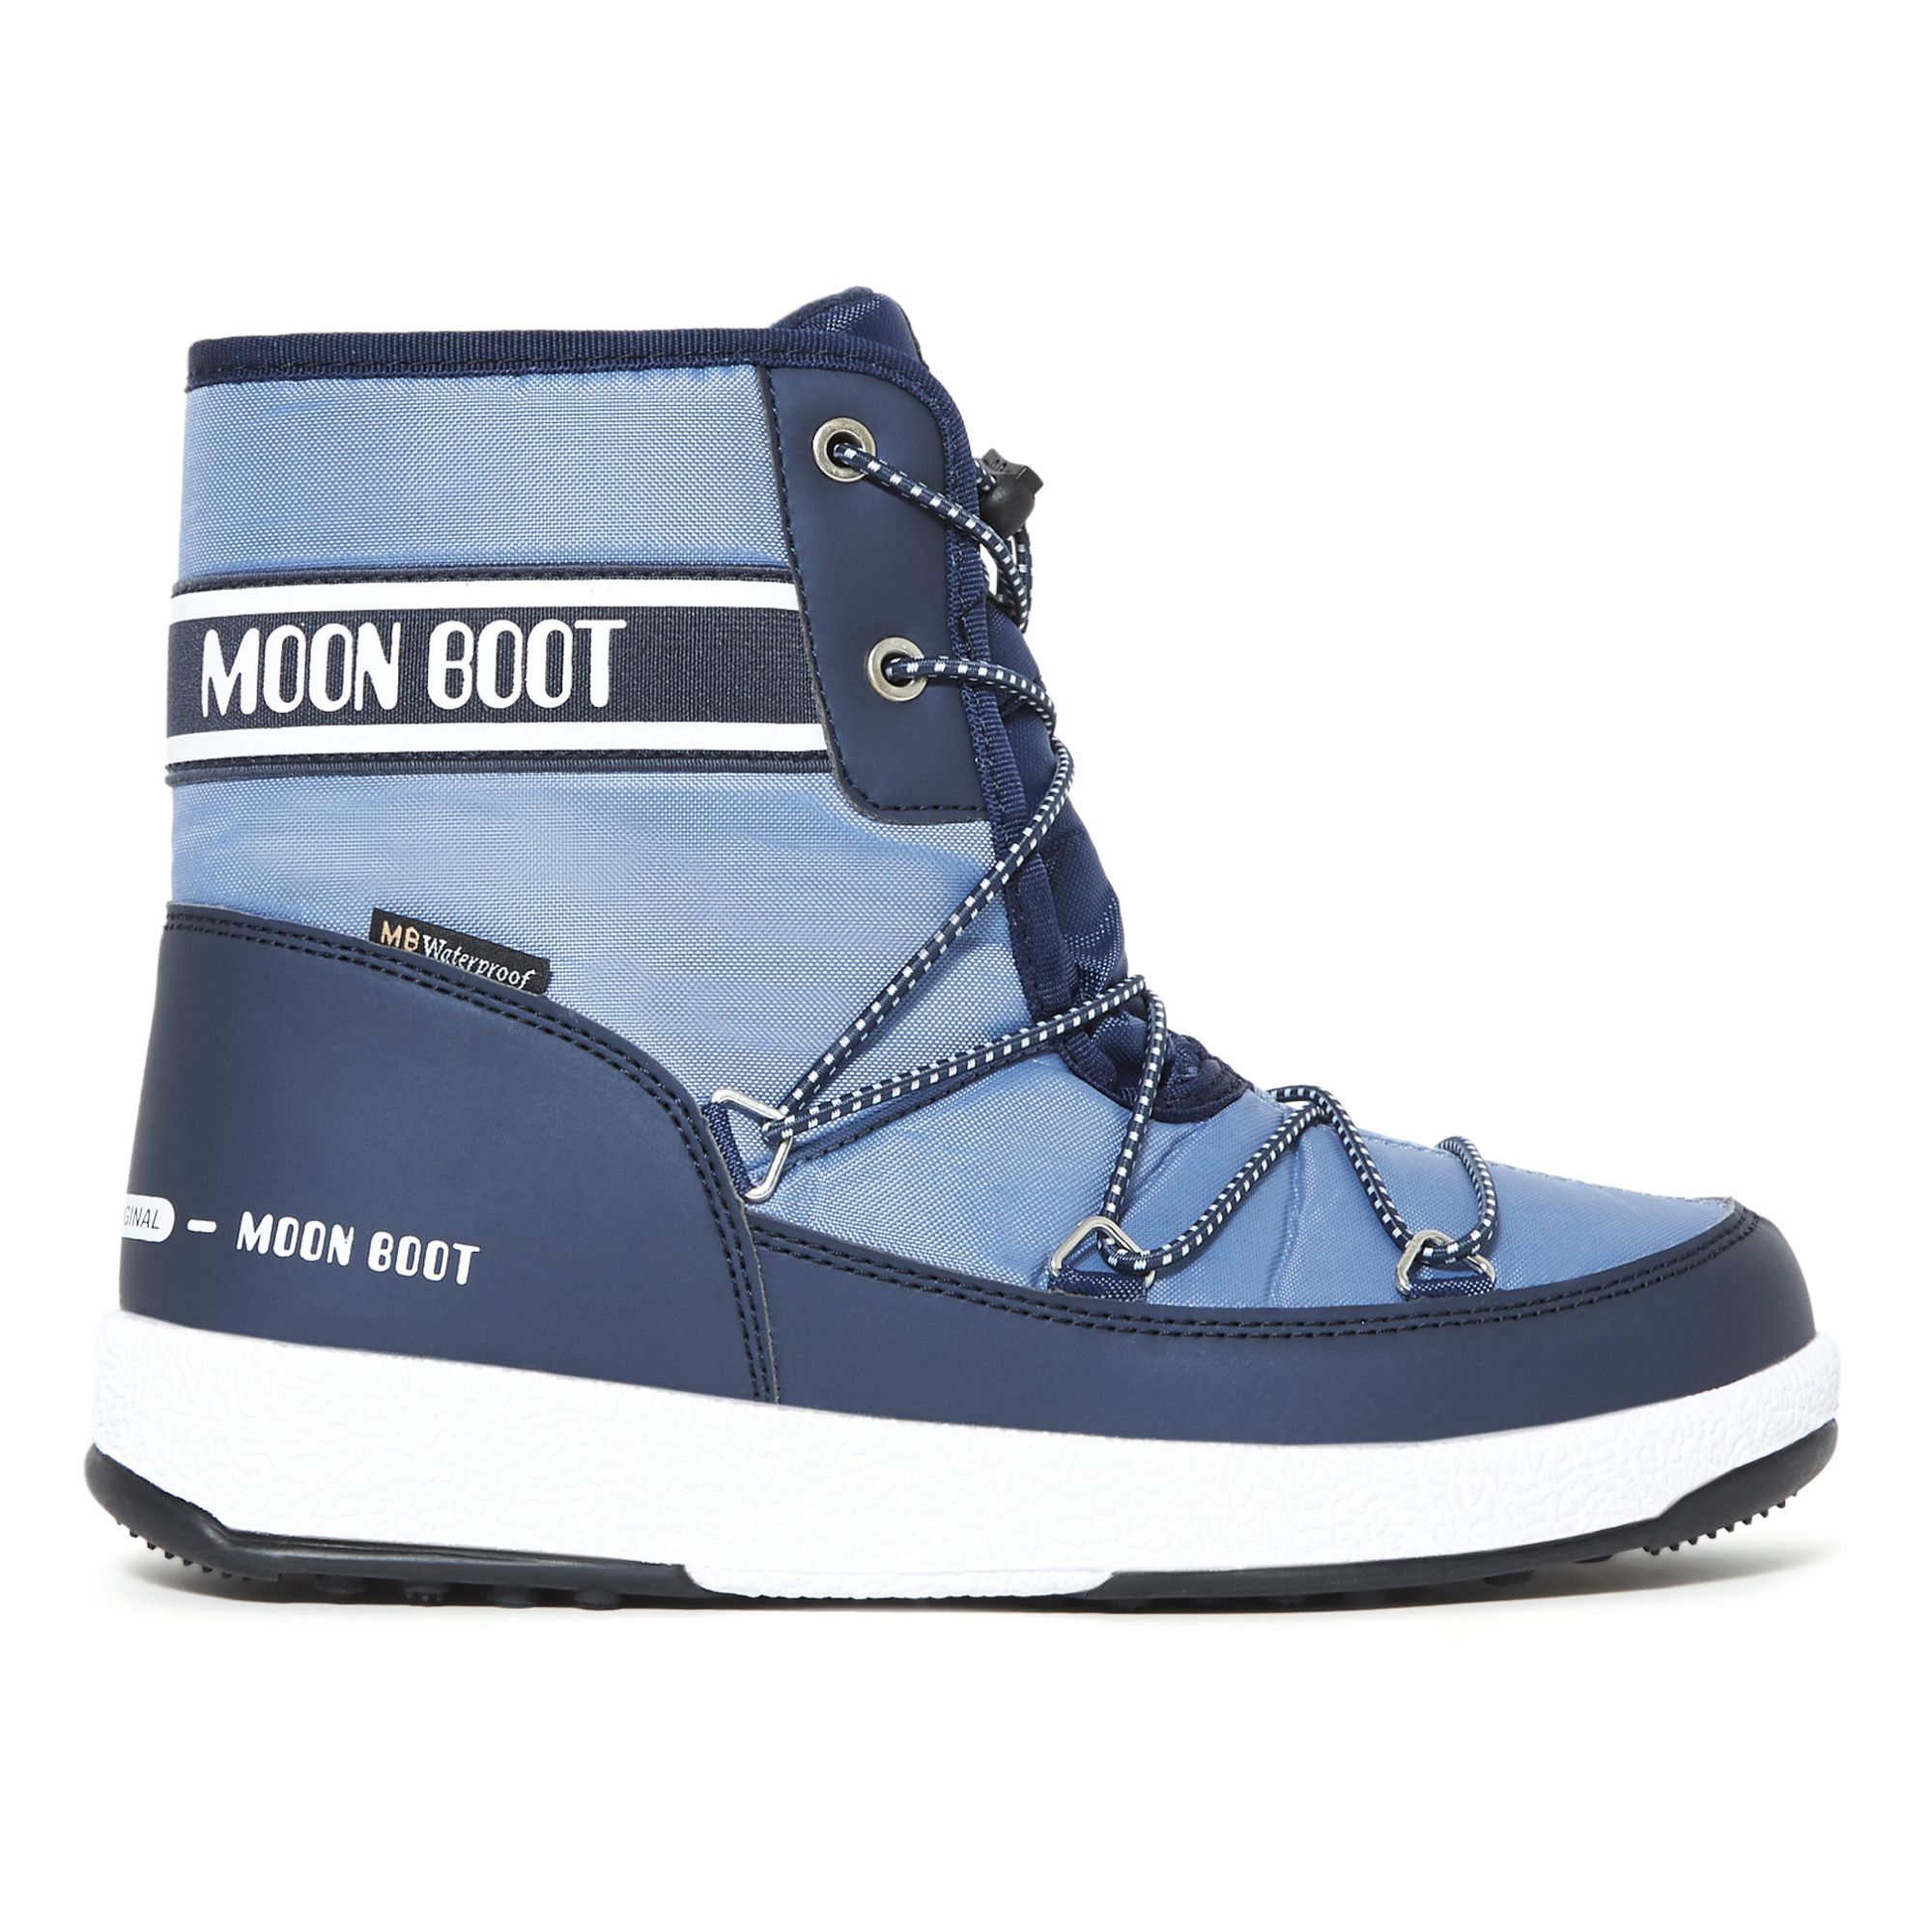 Buy > moon boots high nylon > in stock